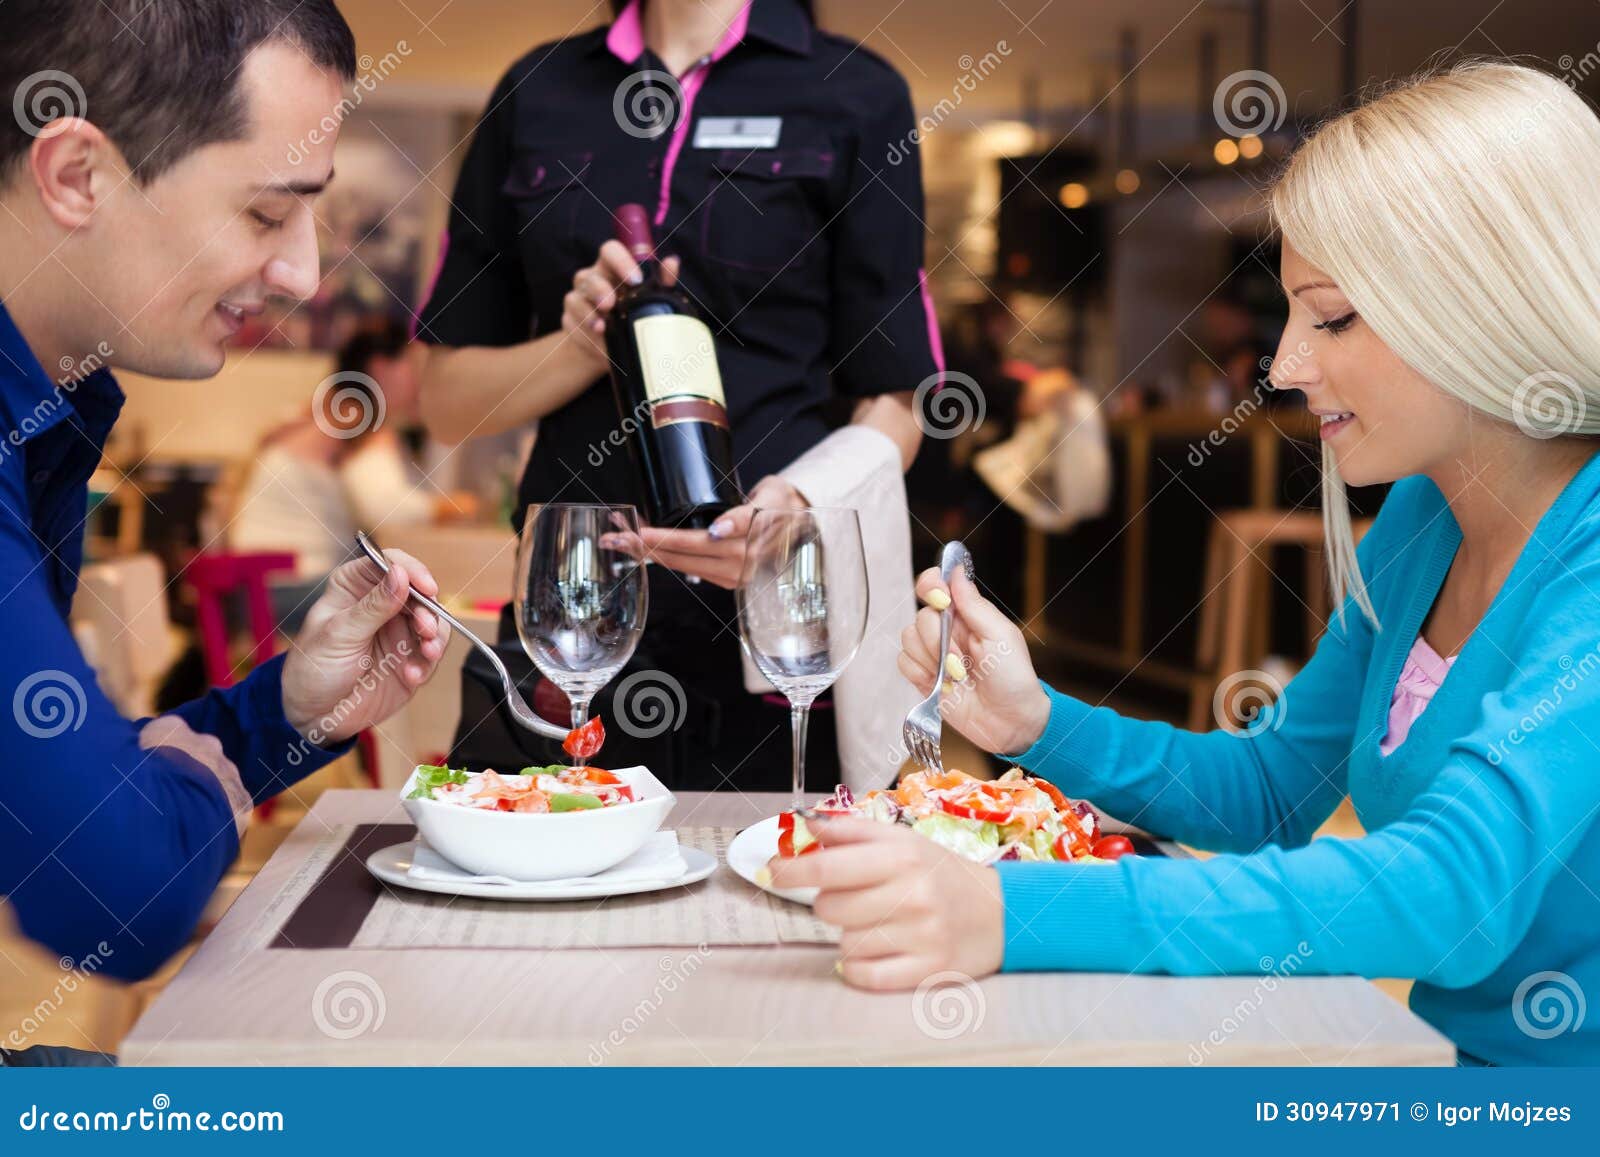 nice dinner in a restaurant - waiter offers wine